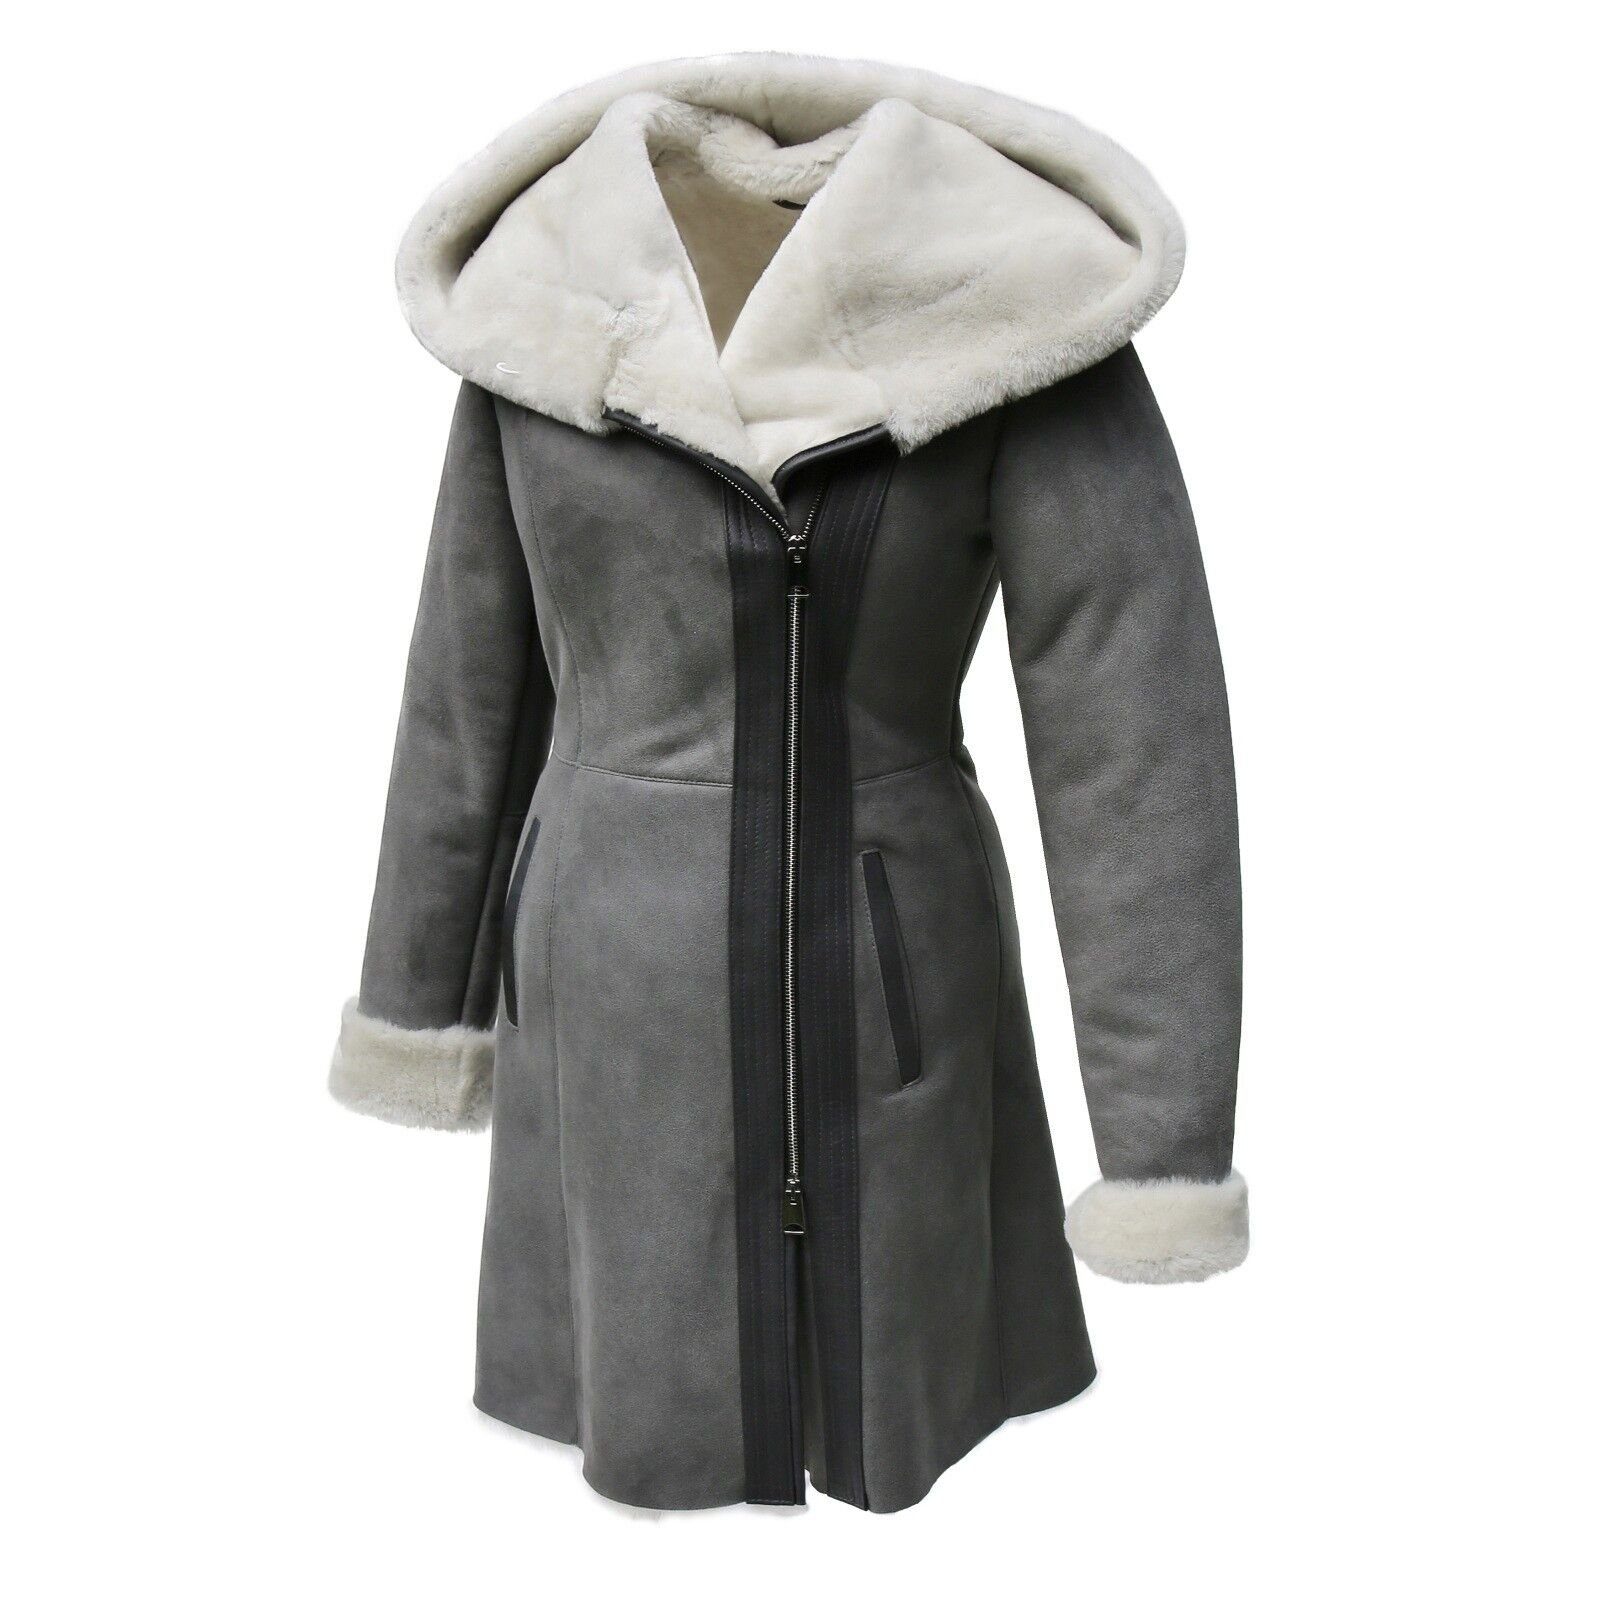 Hollert Winterjacke Kate Damen Jacke aus Merino Schaffell Echtleder mit Kapuze Grau/Weiß